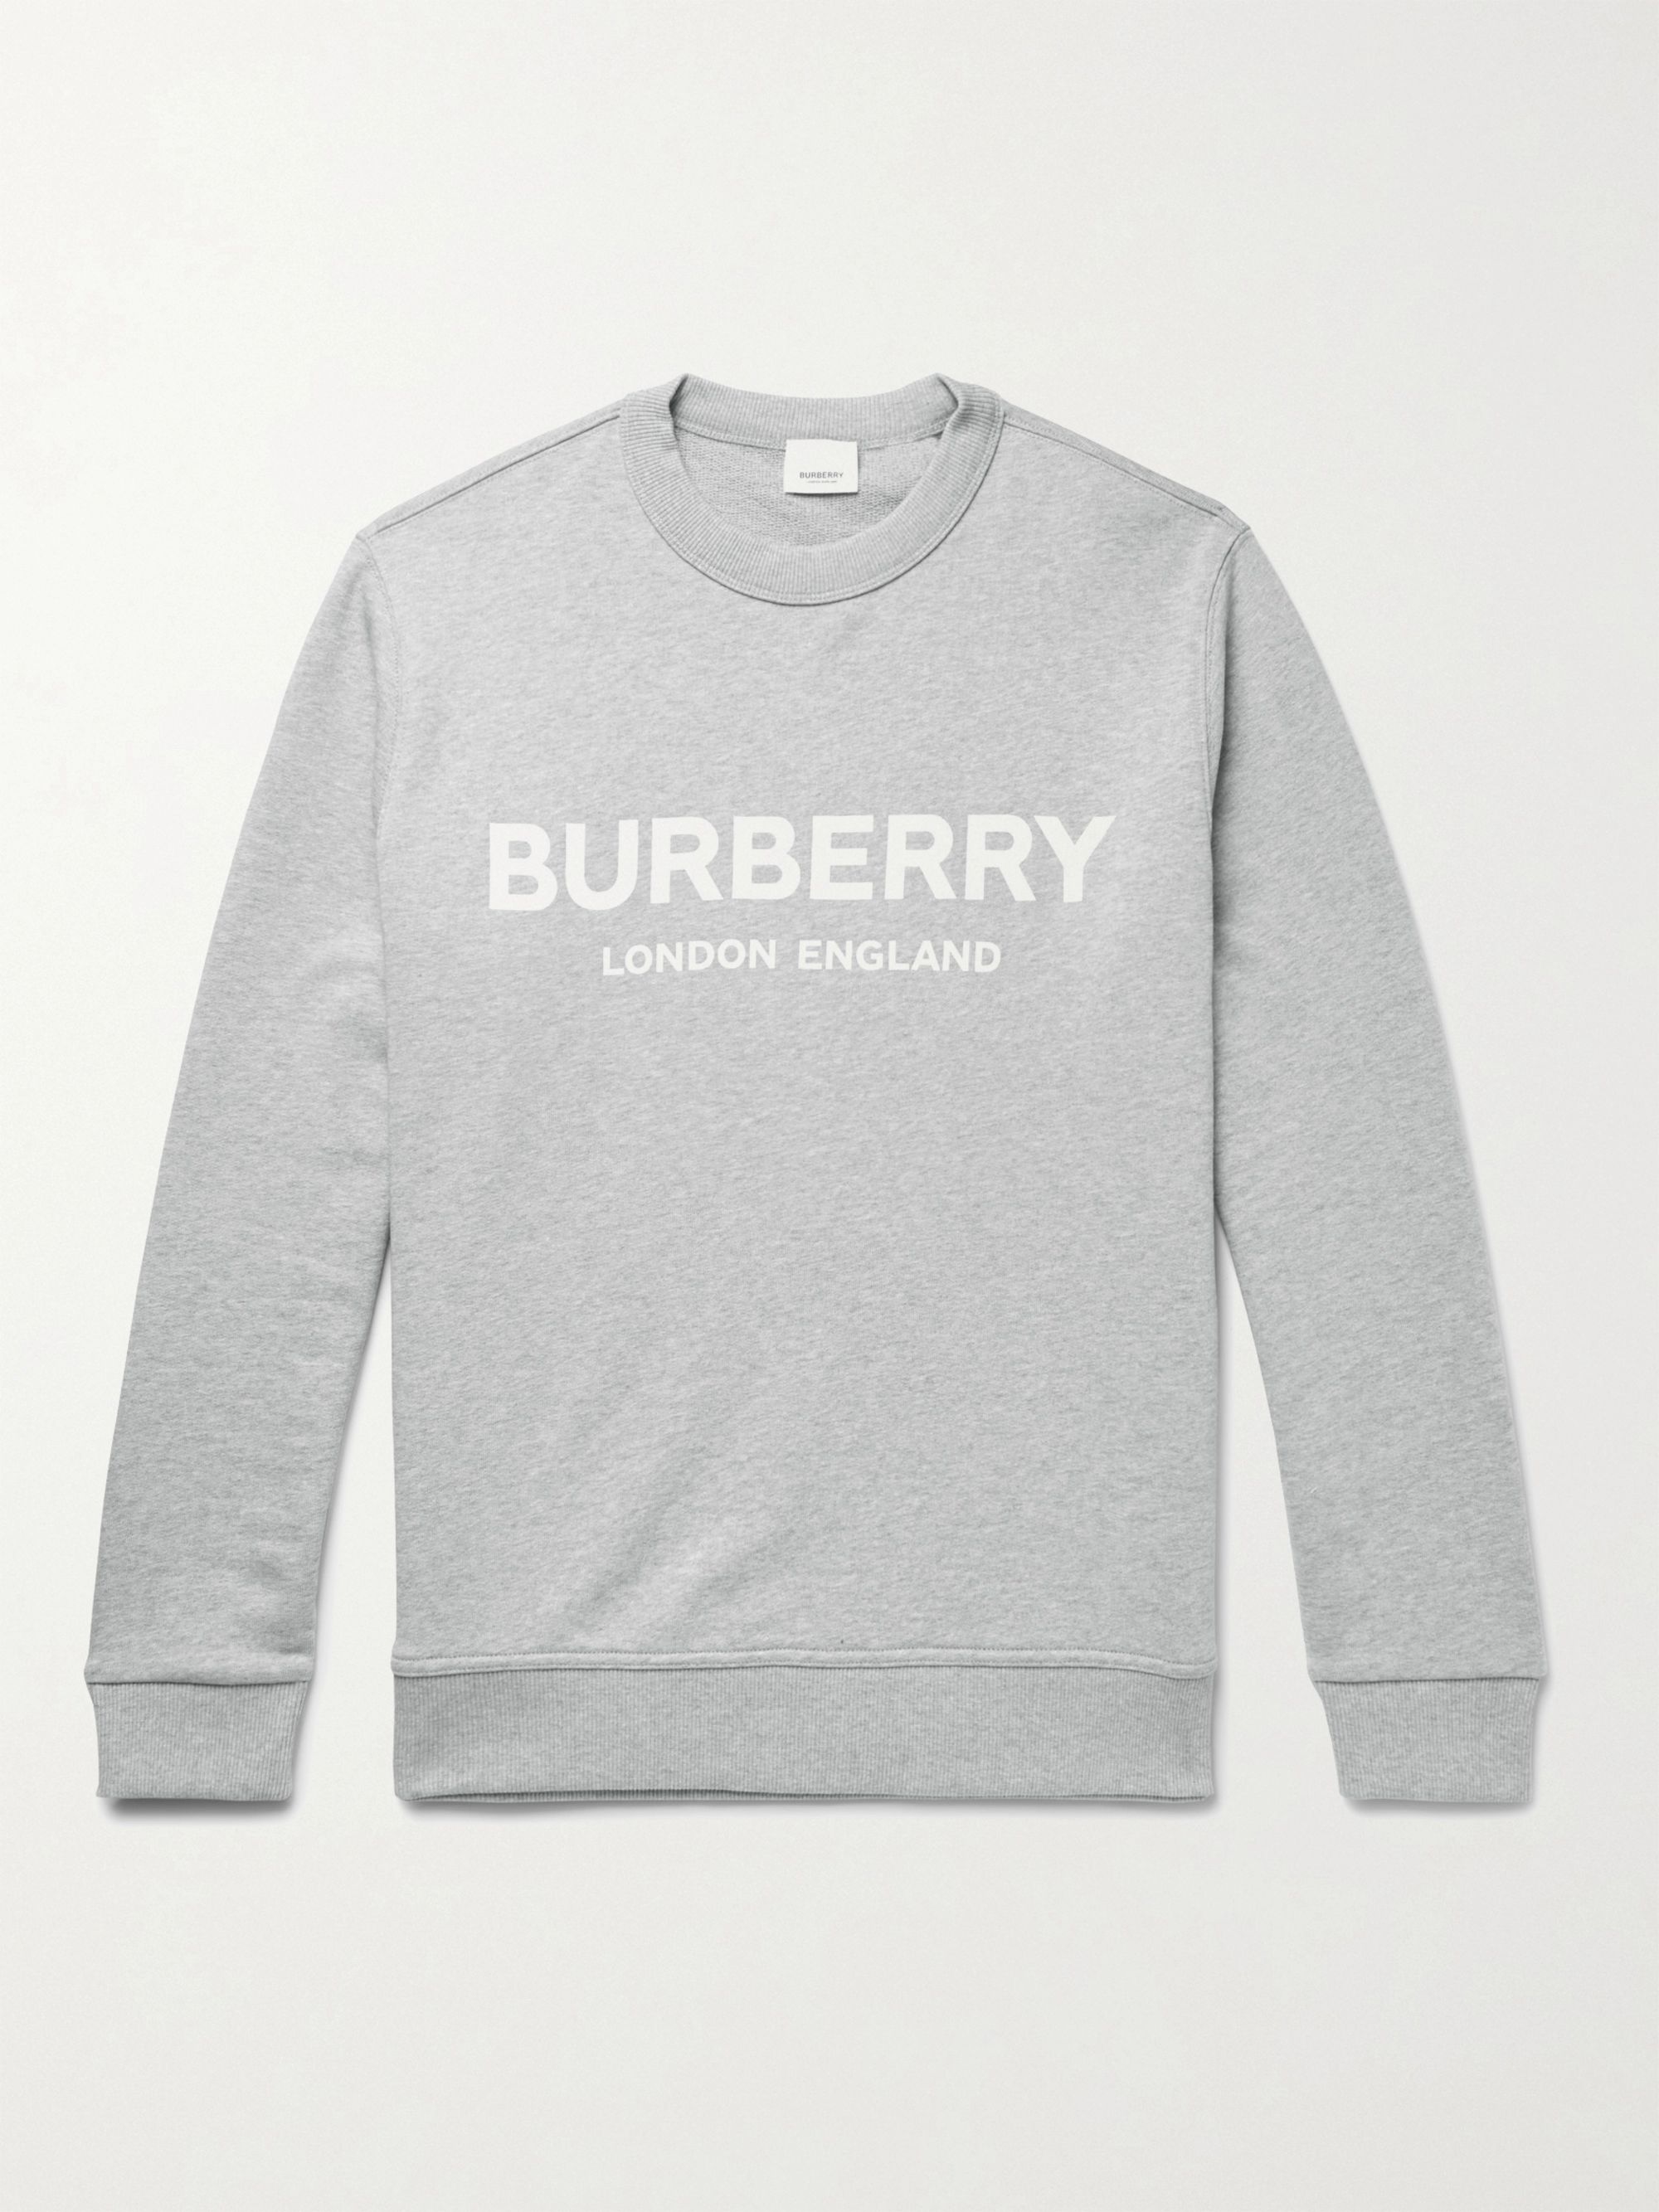 burberry print sweater